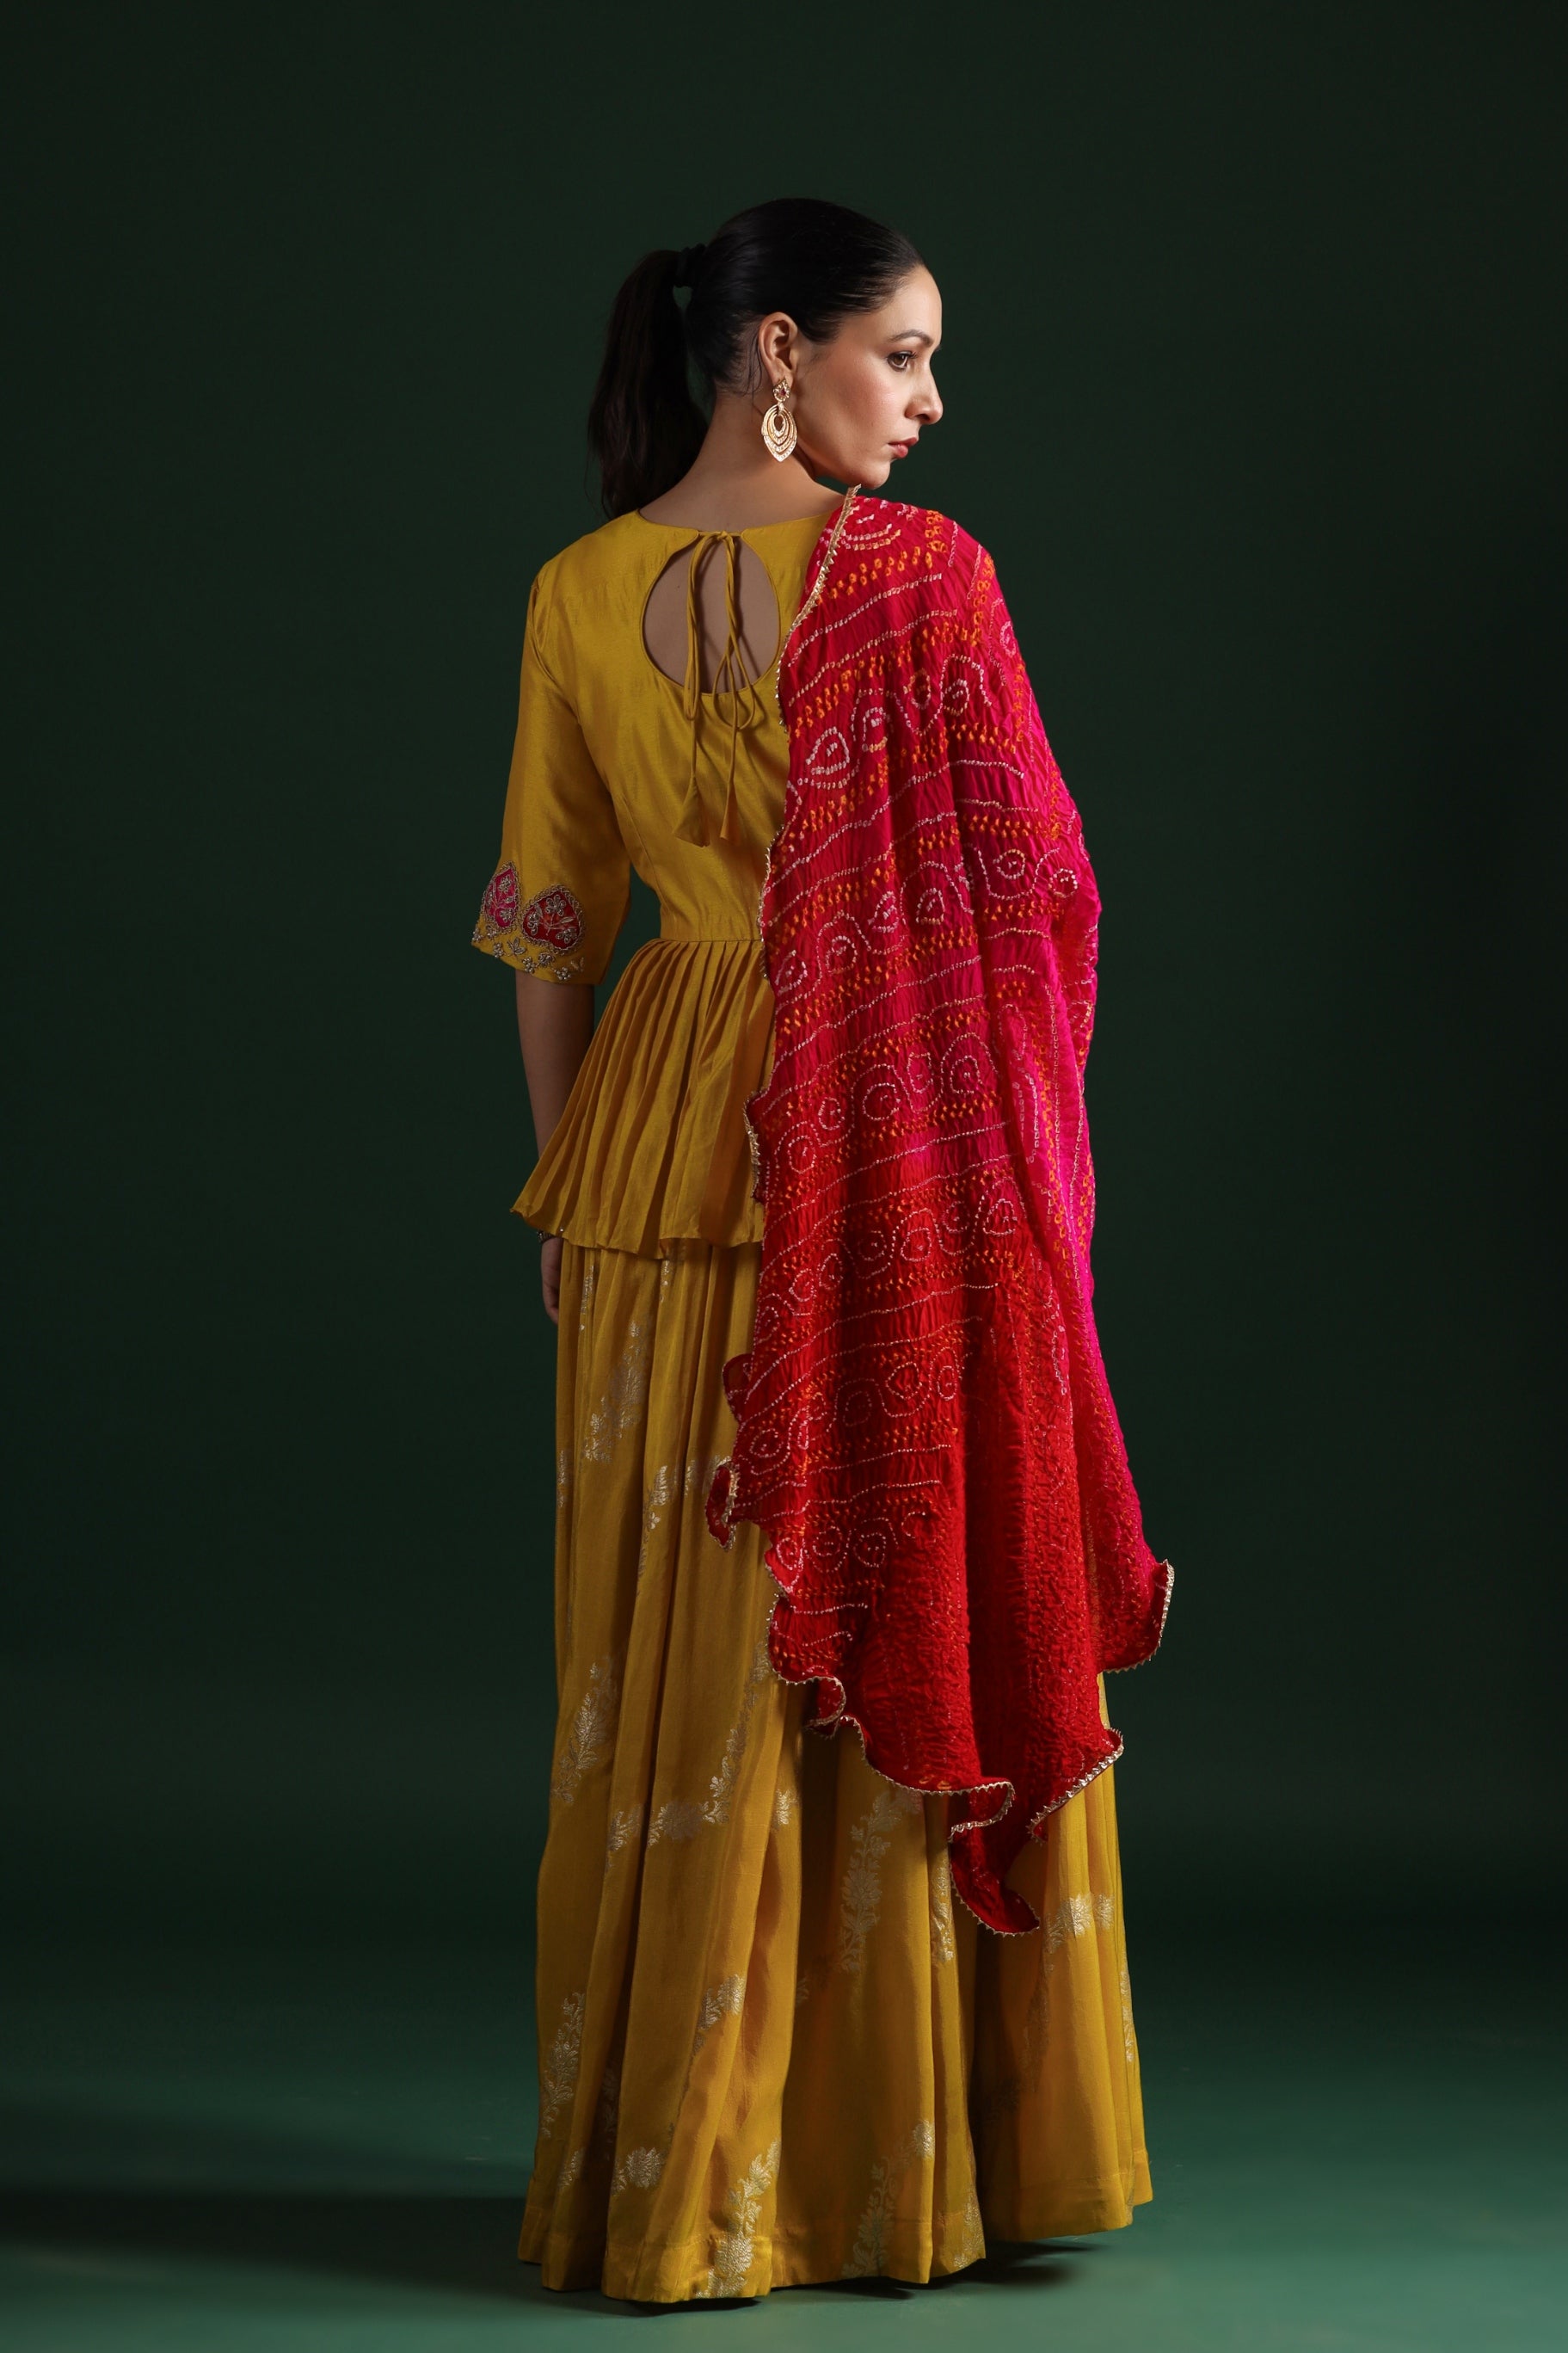 Festive Yellow Peplum & Skirt with Bandhej Dupatta